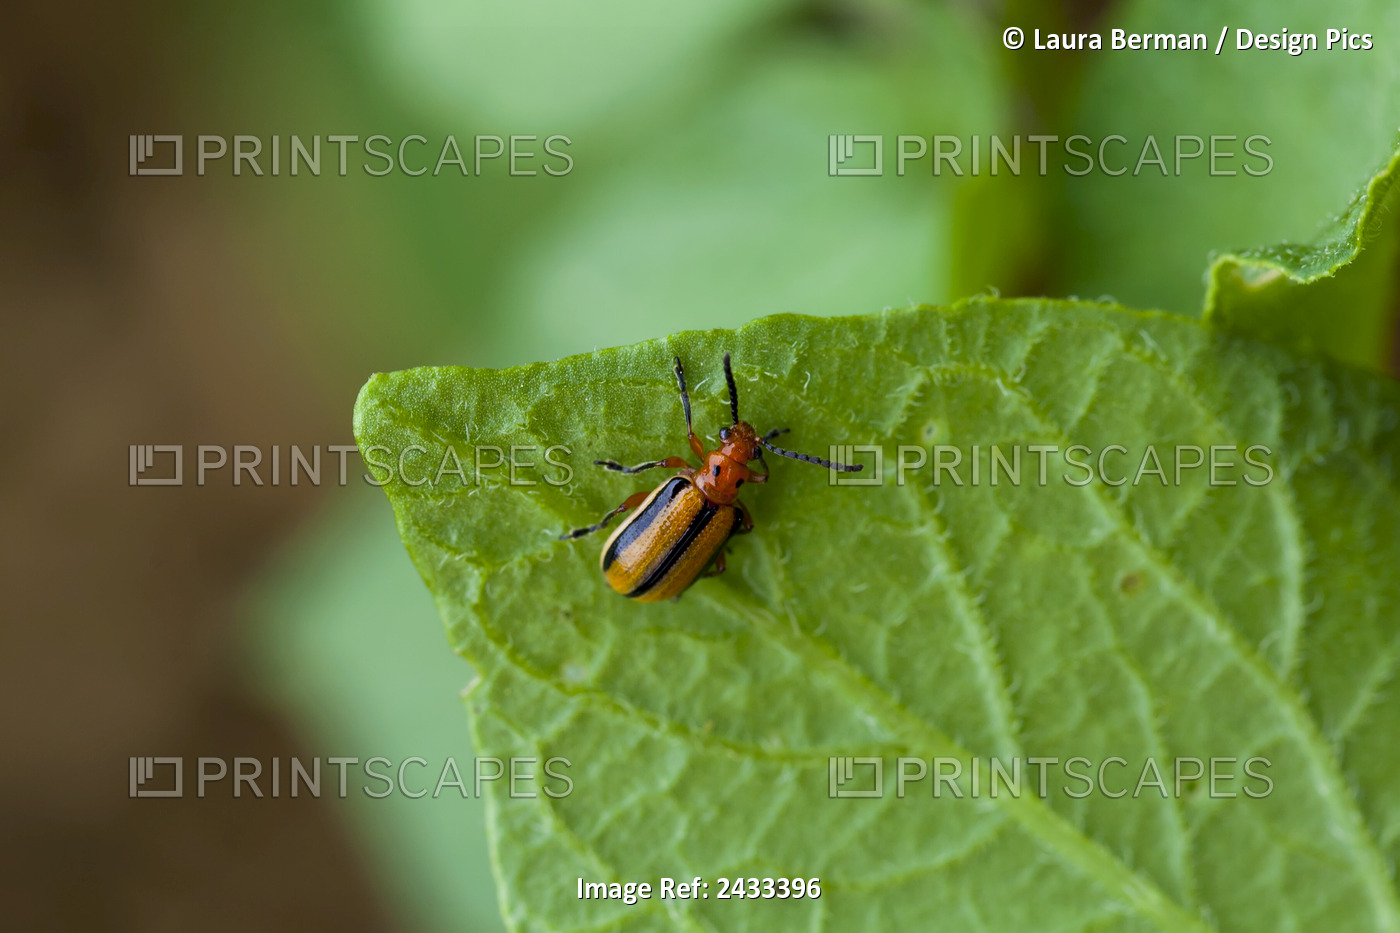 Colorado Potato Beetle; Castleton, Ontario, Canada